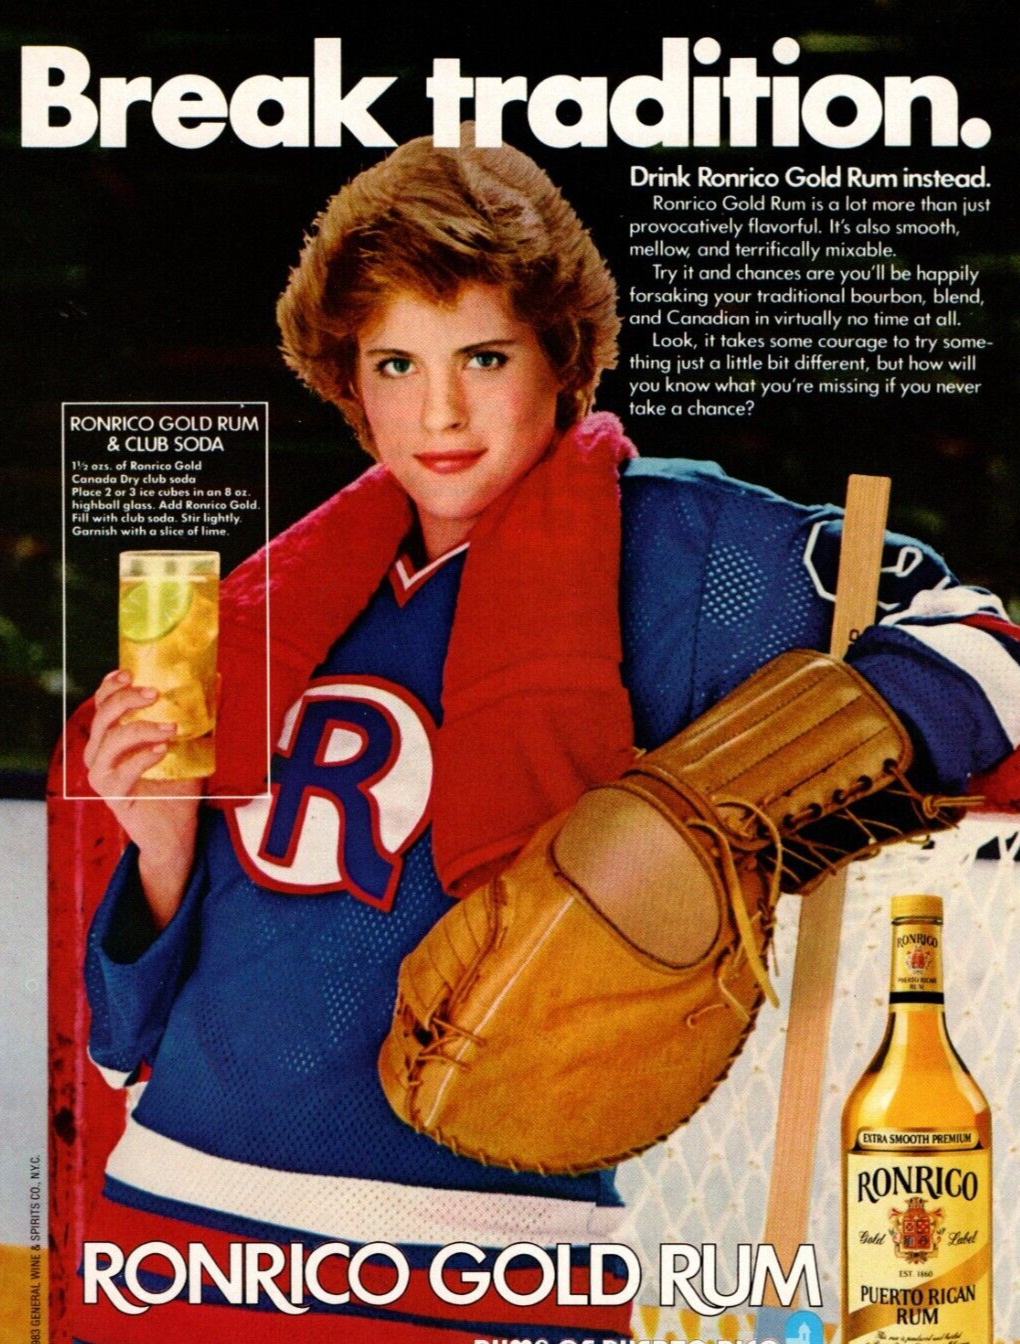 1983 RONRICO GOLD RUM PRINT AD, SEXY WOMAN HOCKEY PLAYER,  ALCOHOL PRINT AD